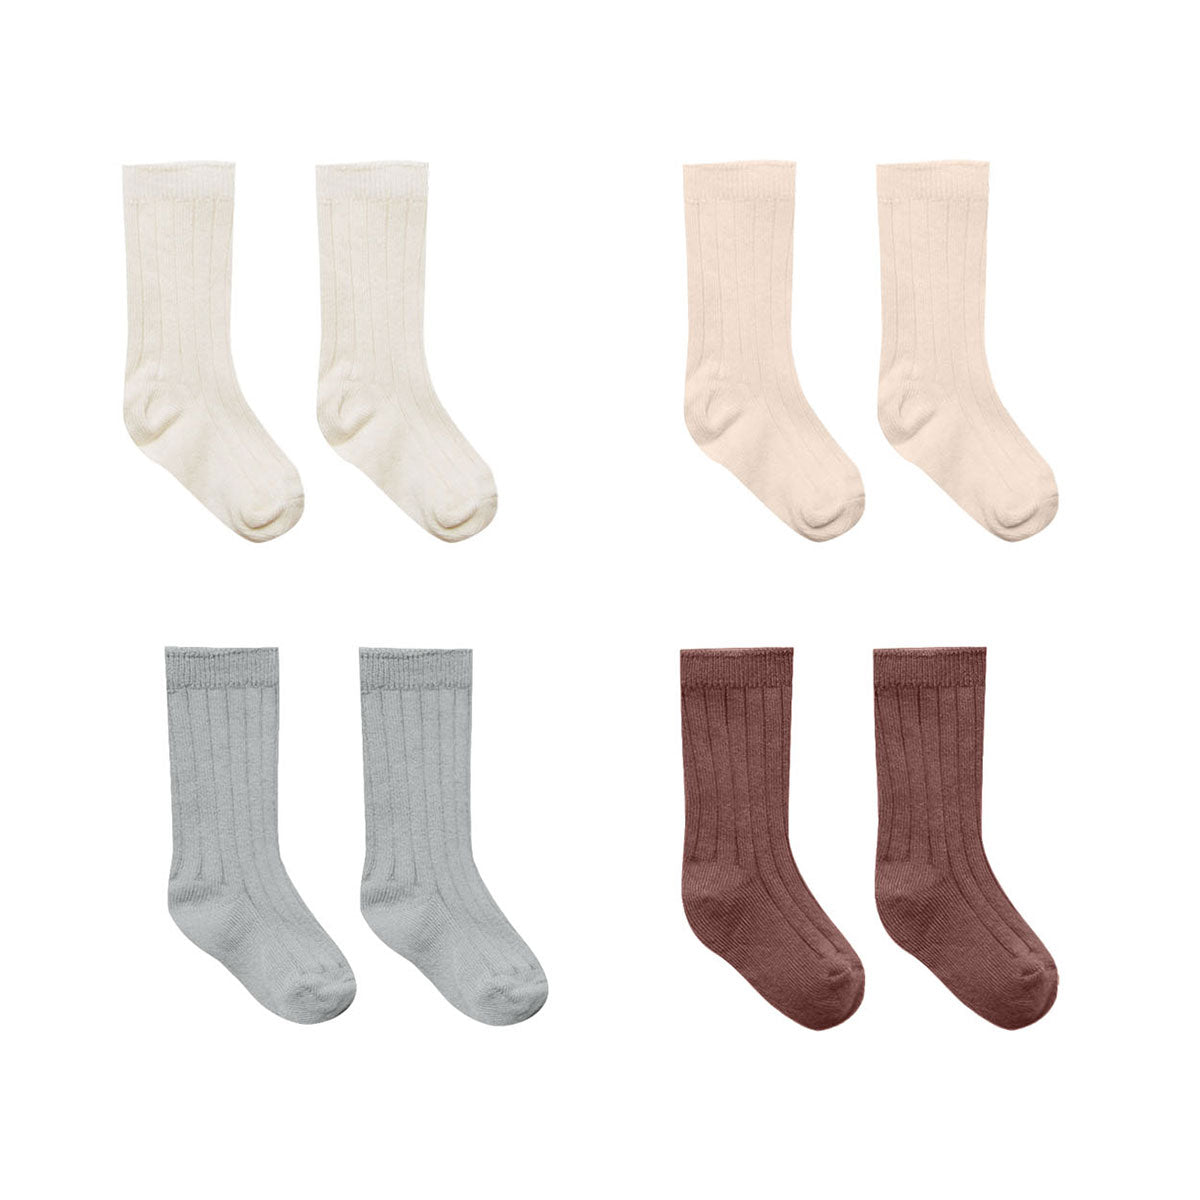 Quincy Mae Socks - Set of 4